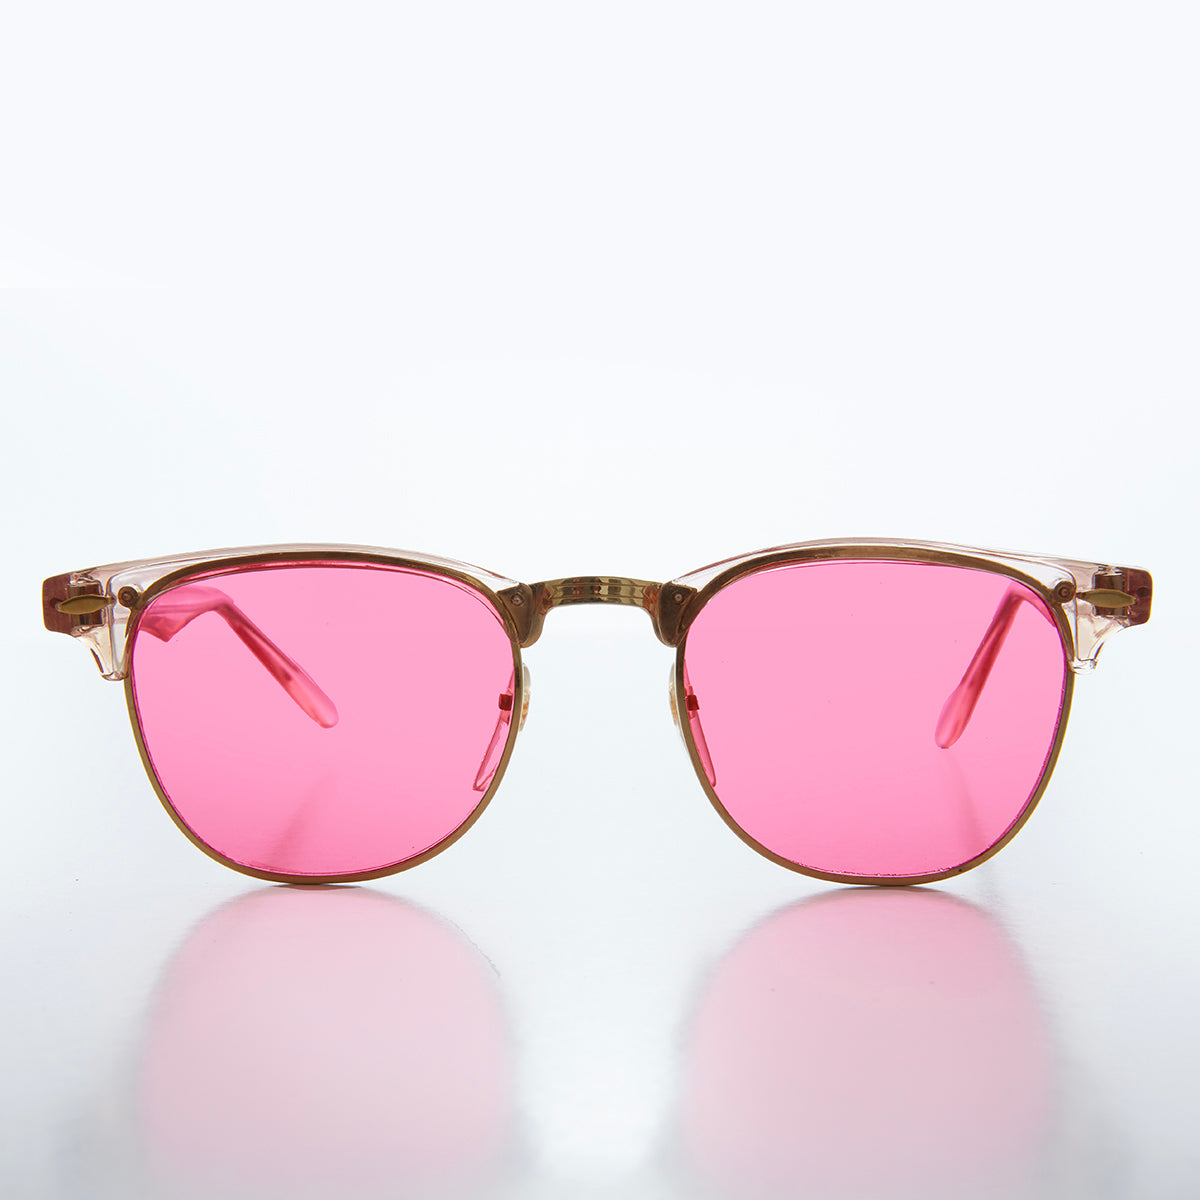 Classic Half Frame Vintage Sunglasses